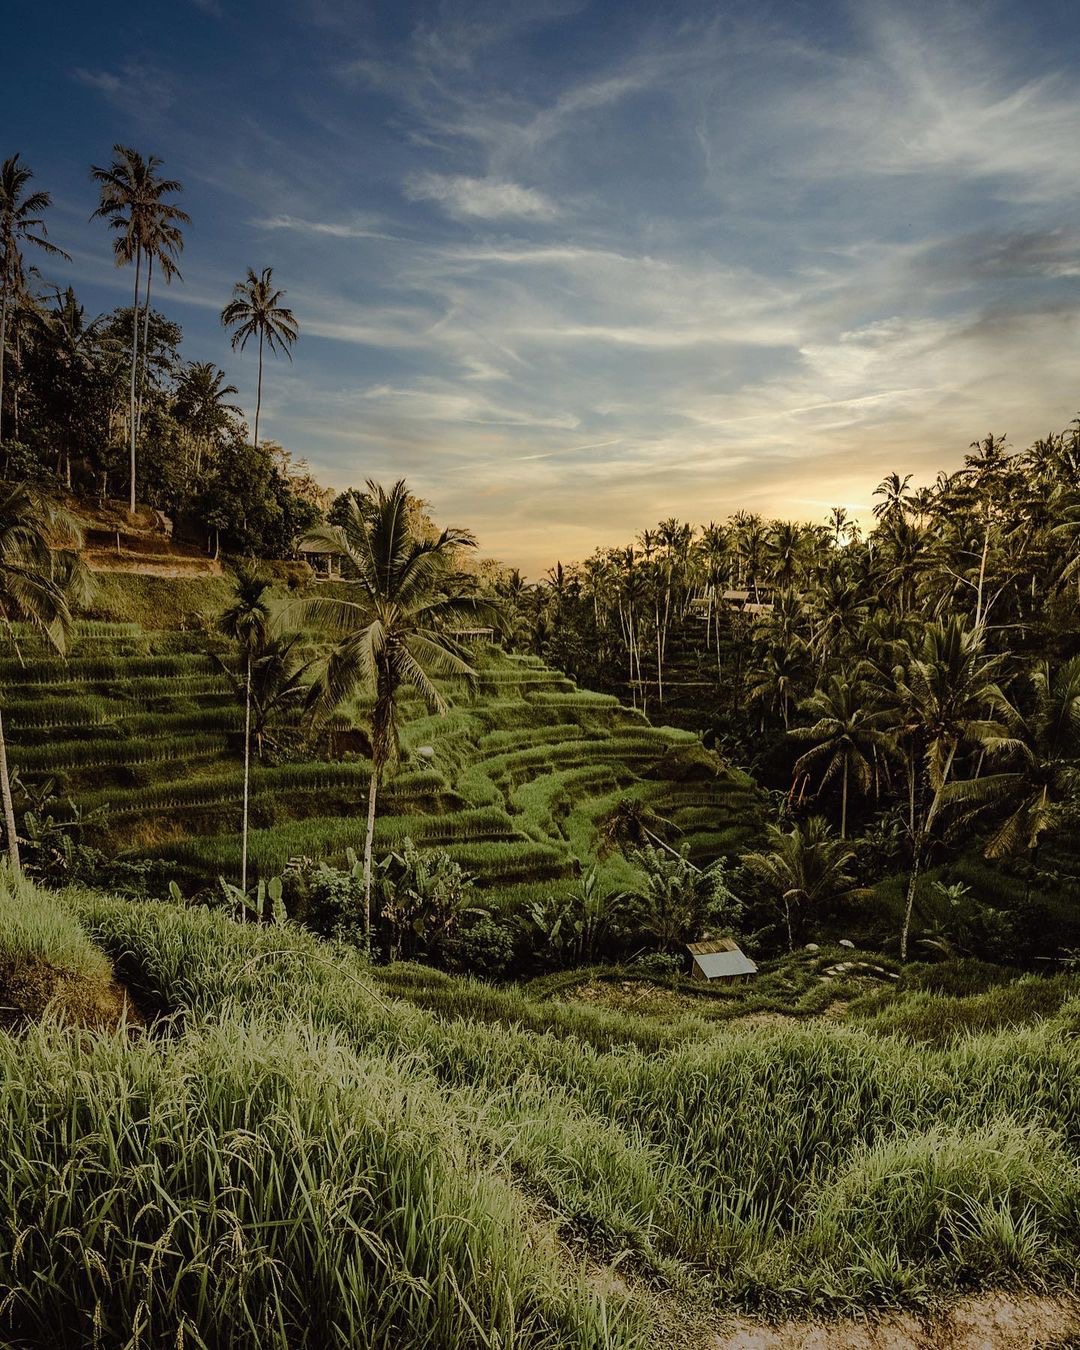 dang tran, Bali, ubud rice terrace